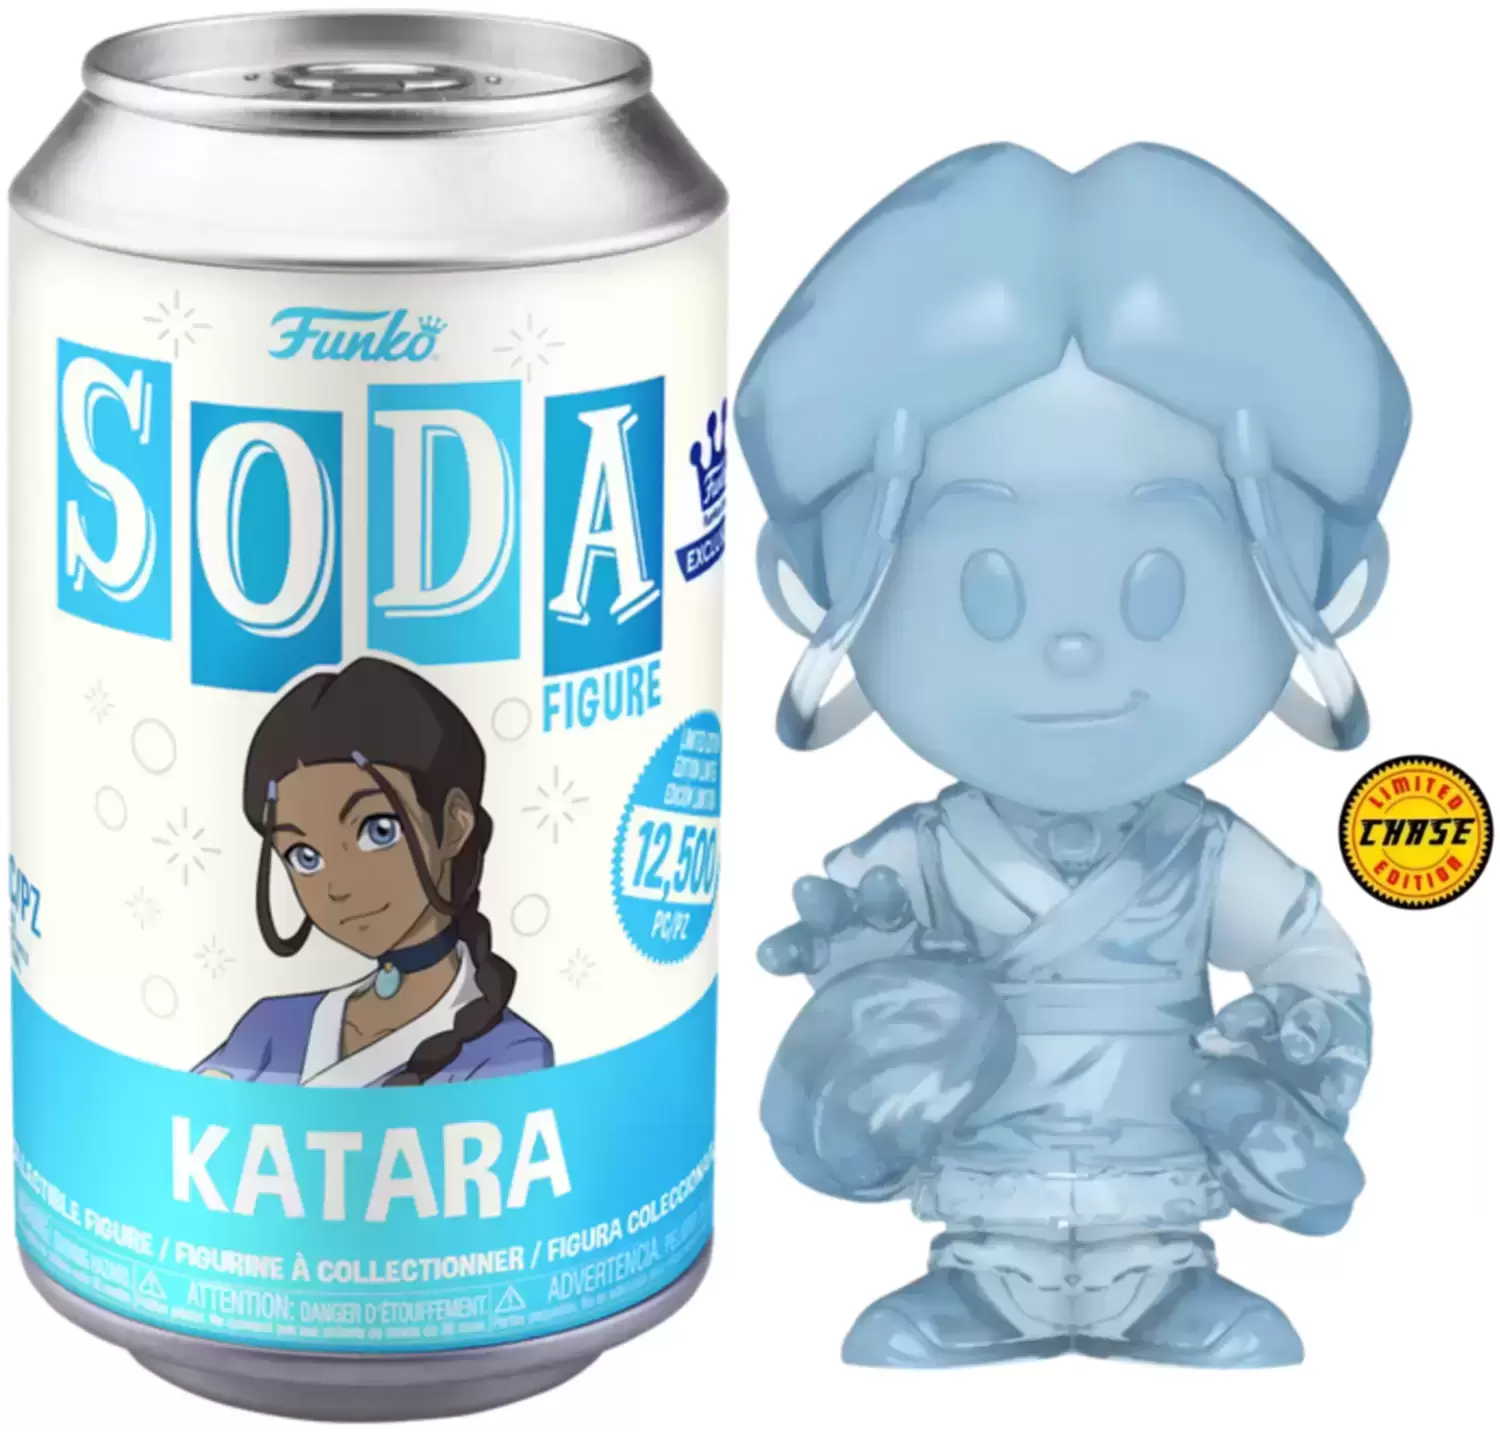 Vinyl Soda! - Avatar The Last Airbender - Katara Chase